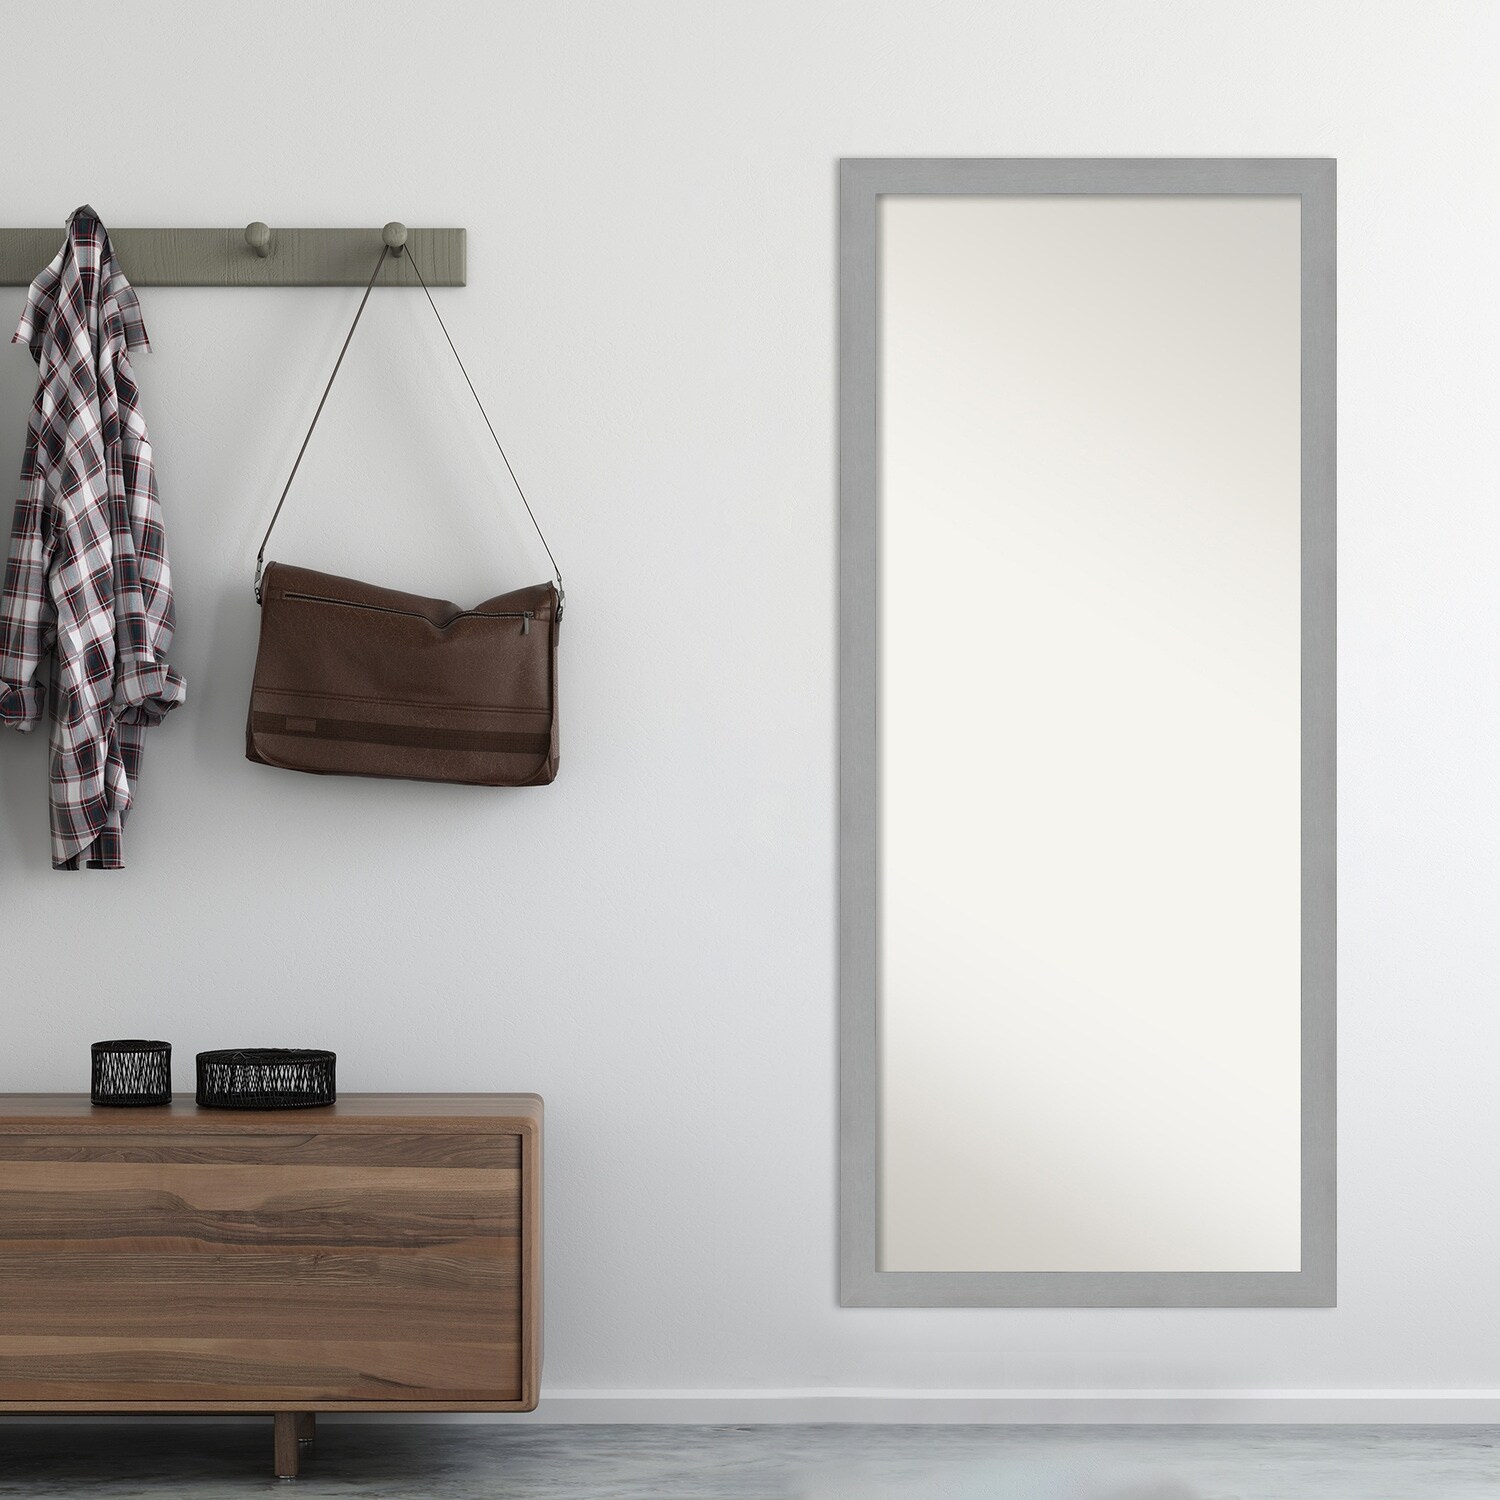 Non-Beveled Wood Full Length Floor Leaner Mirror - Brushed Nickel Frame - Brushed Nickel - Glass Size 24 x 60